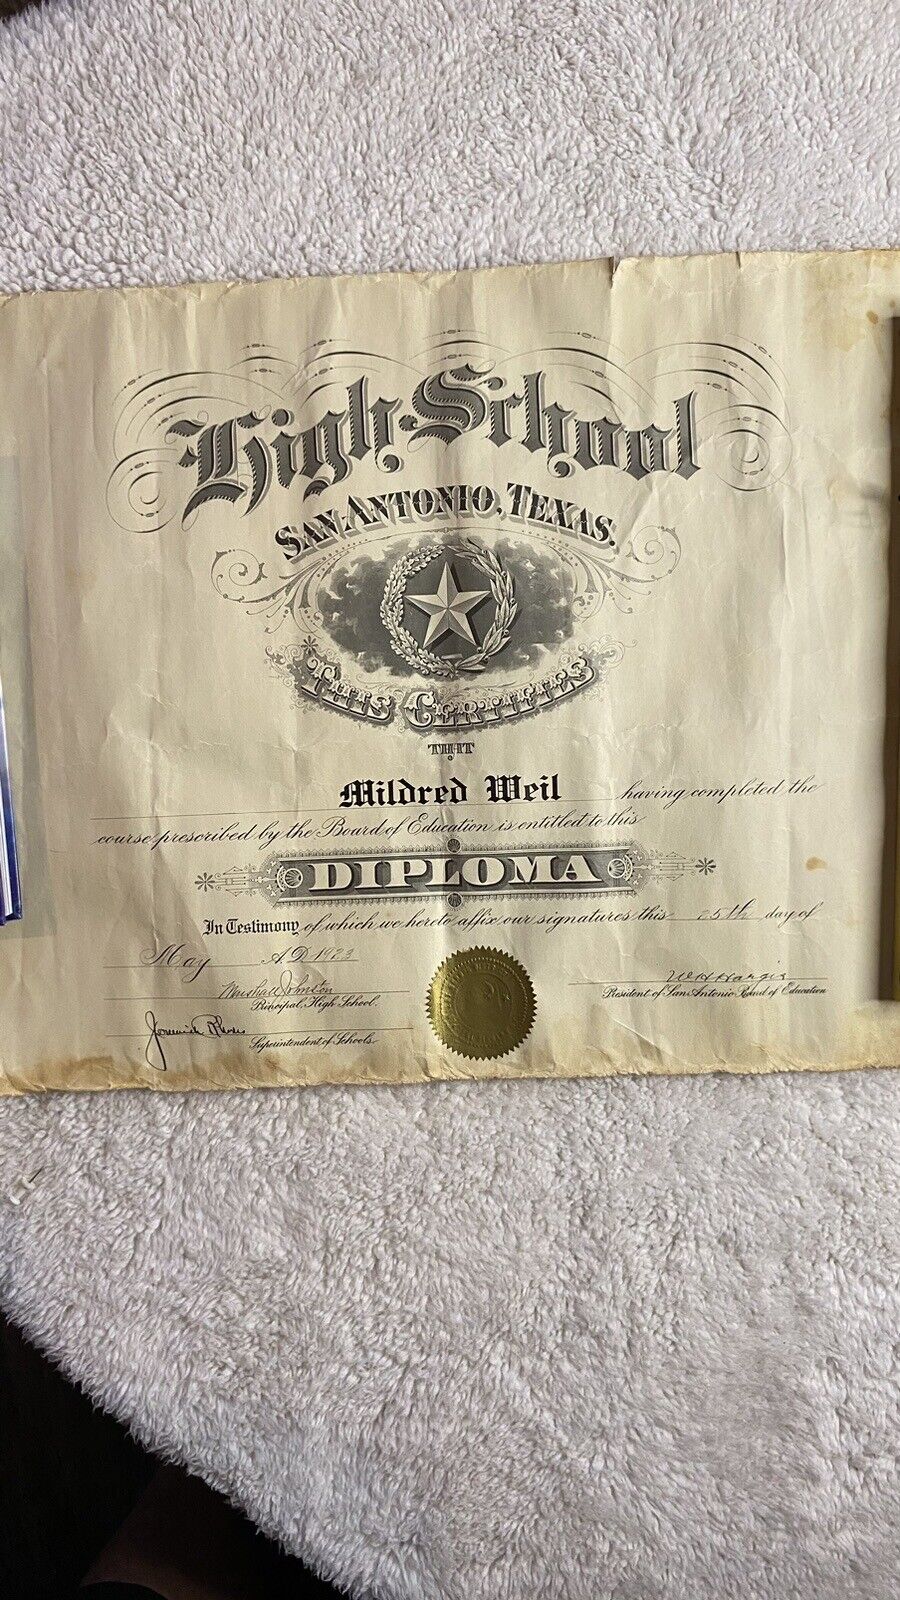 San Antonio Texas high school diploma 1923